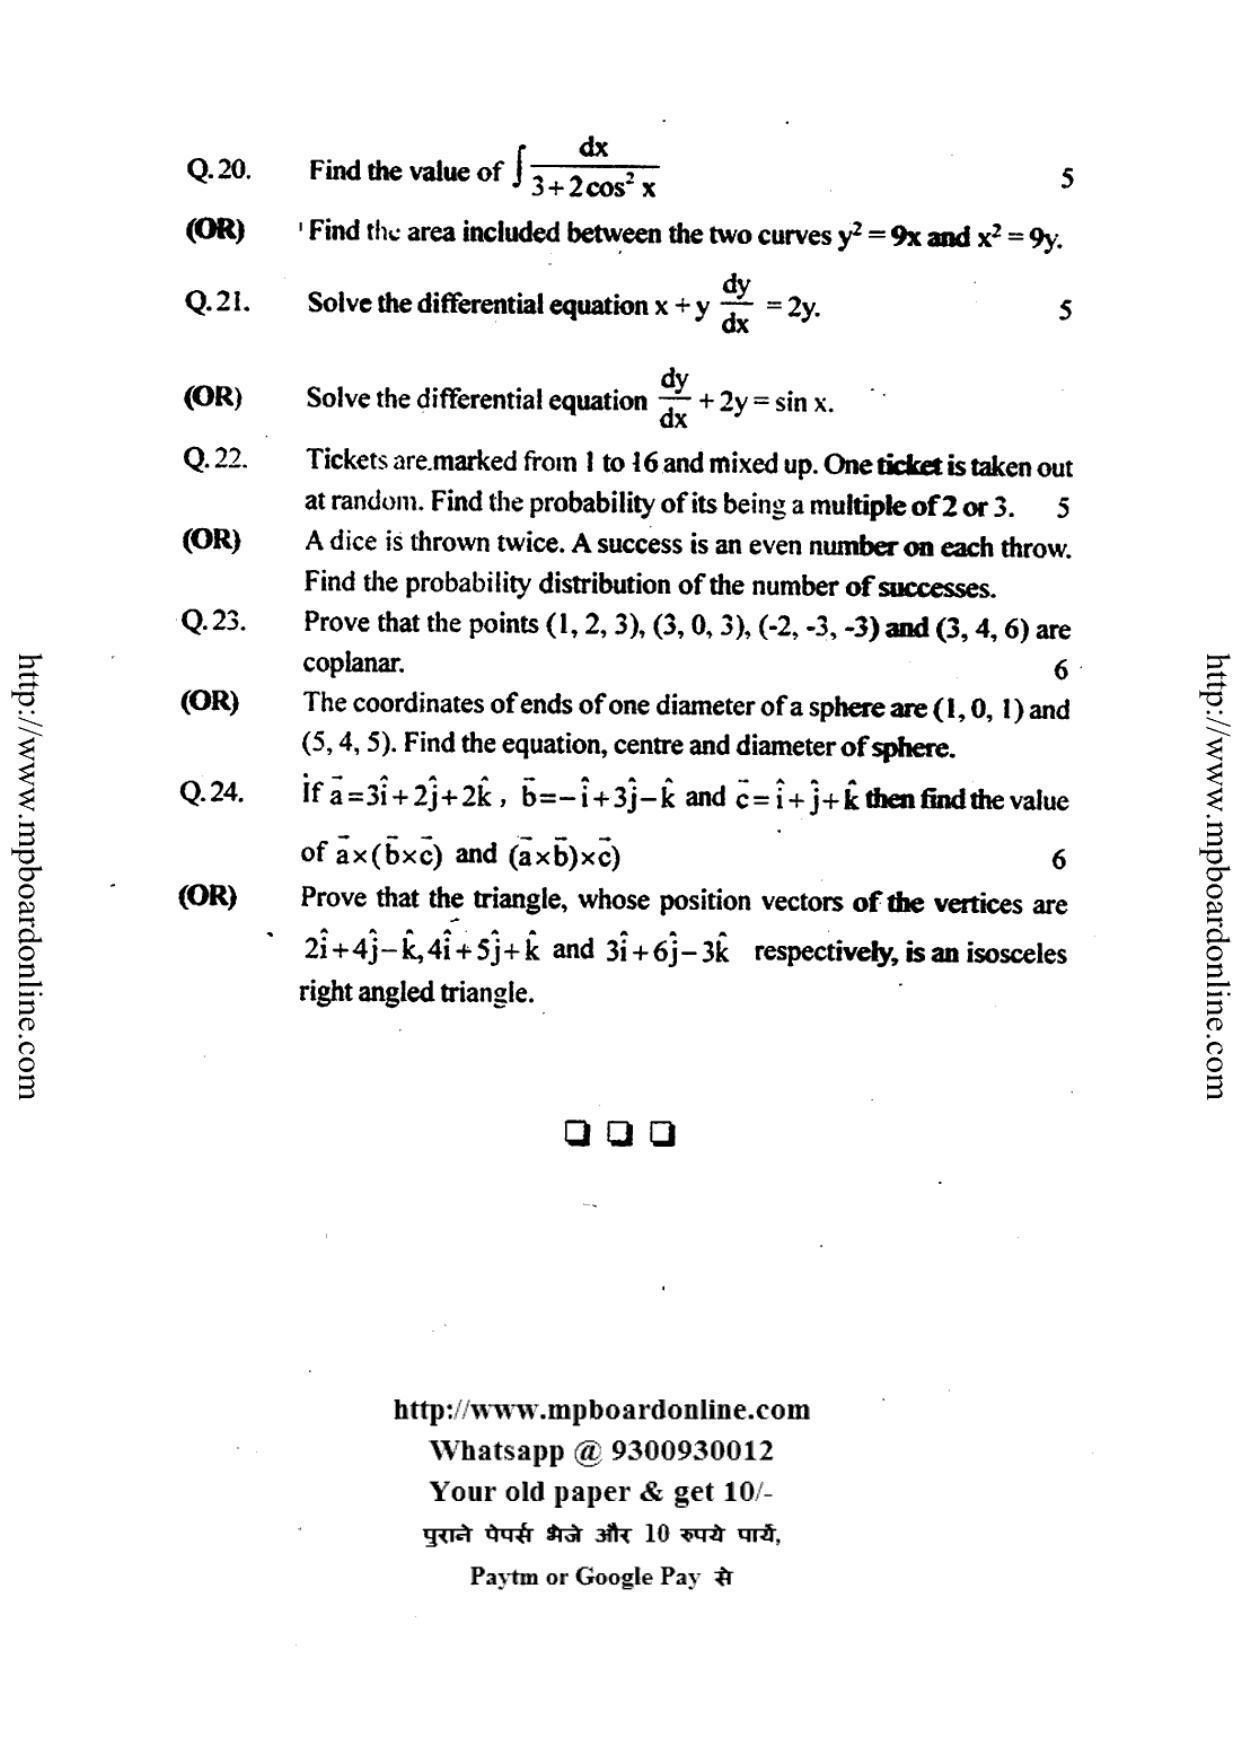 MP Board Class 12 Mathematica 2016 Question Paper - Page 10